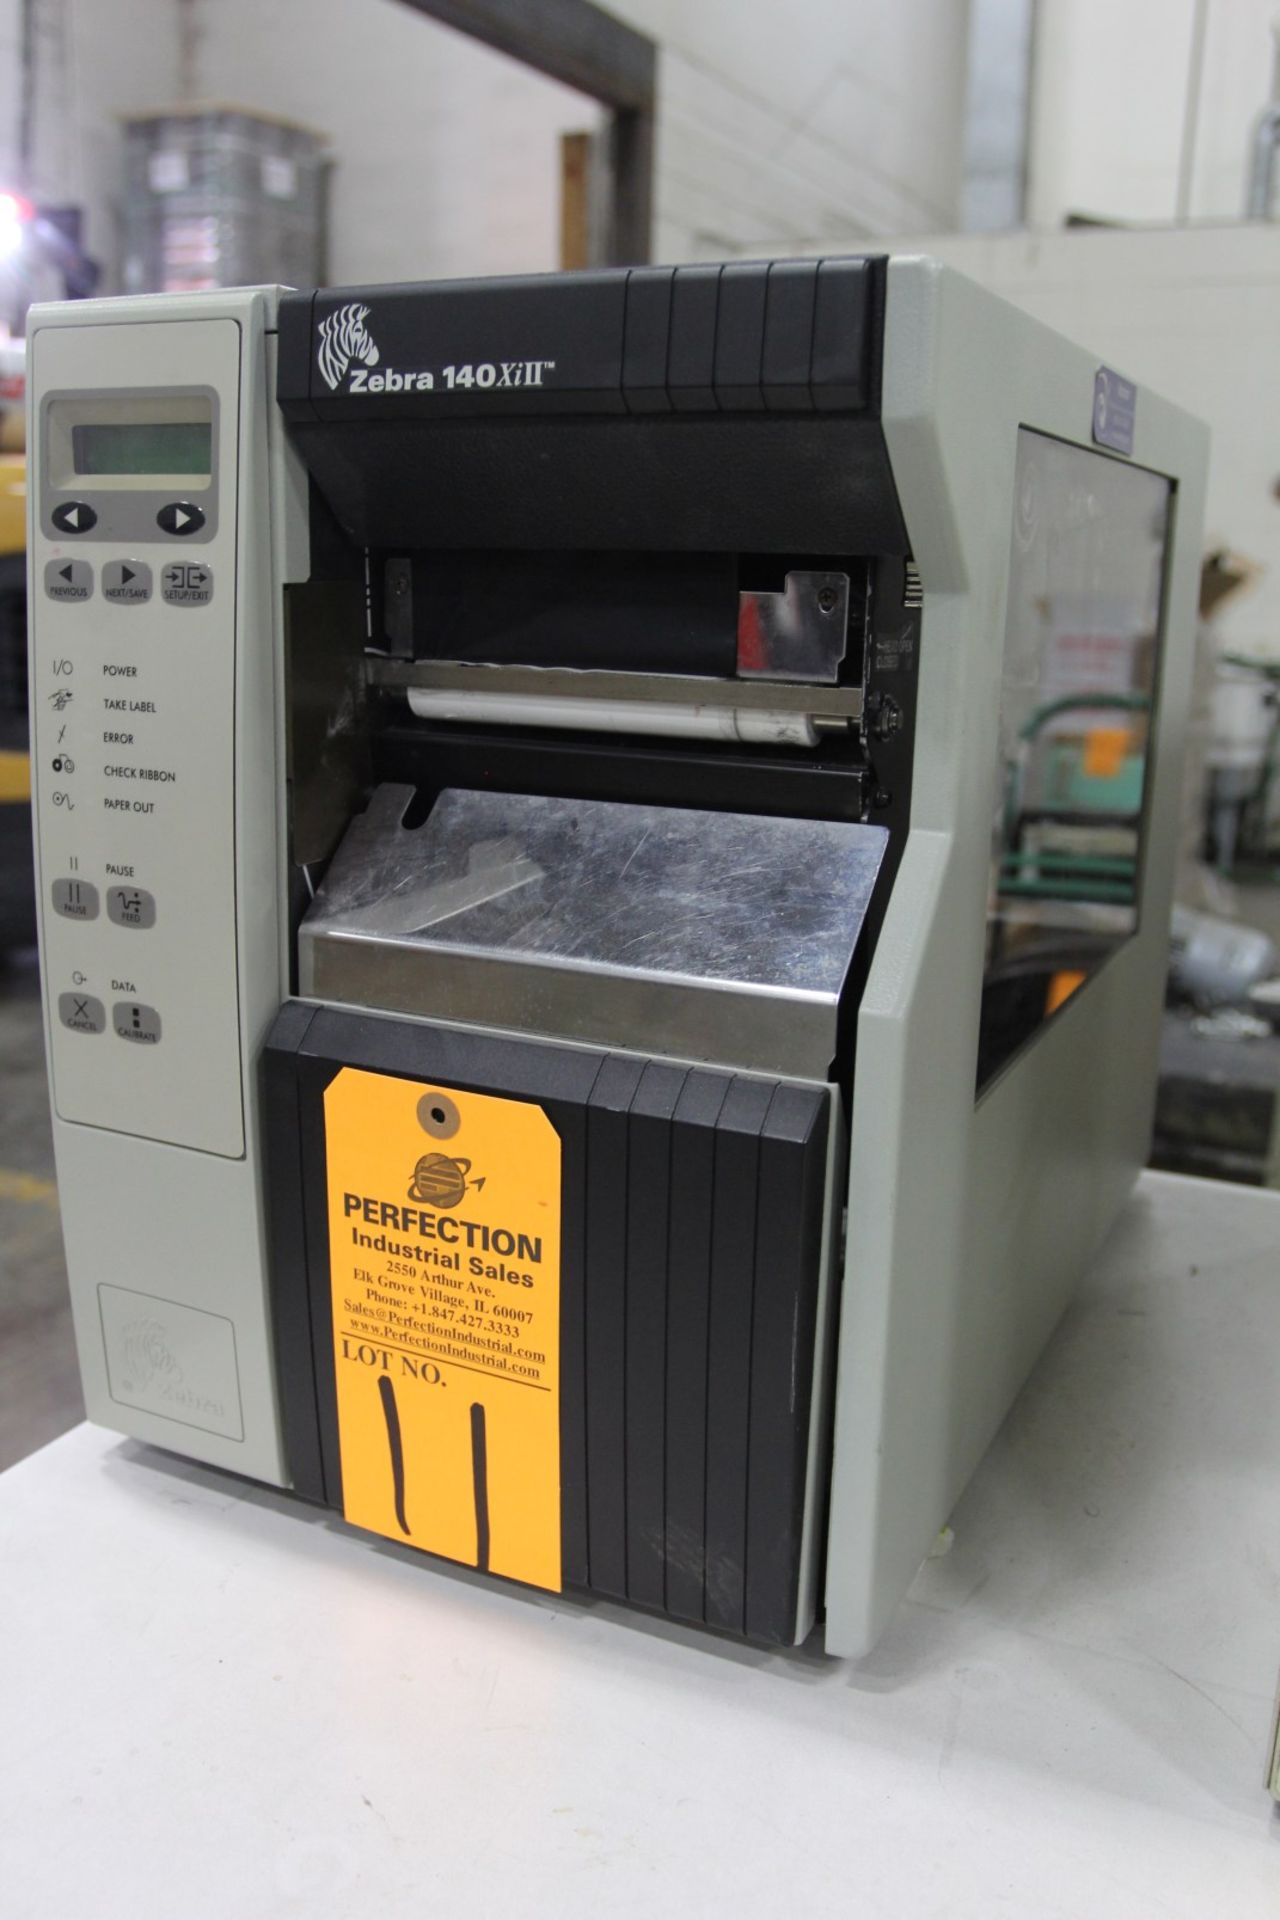 Zebra XIII Industrial Printer, s/n 8542309